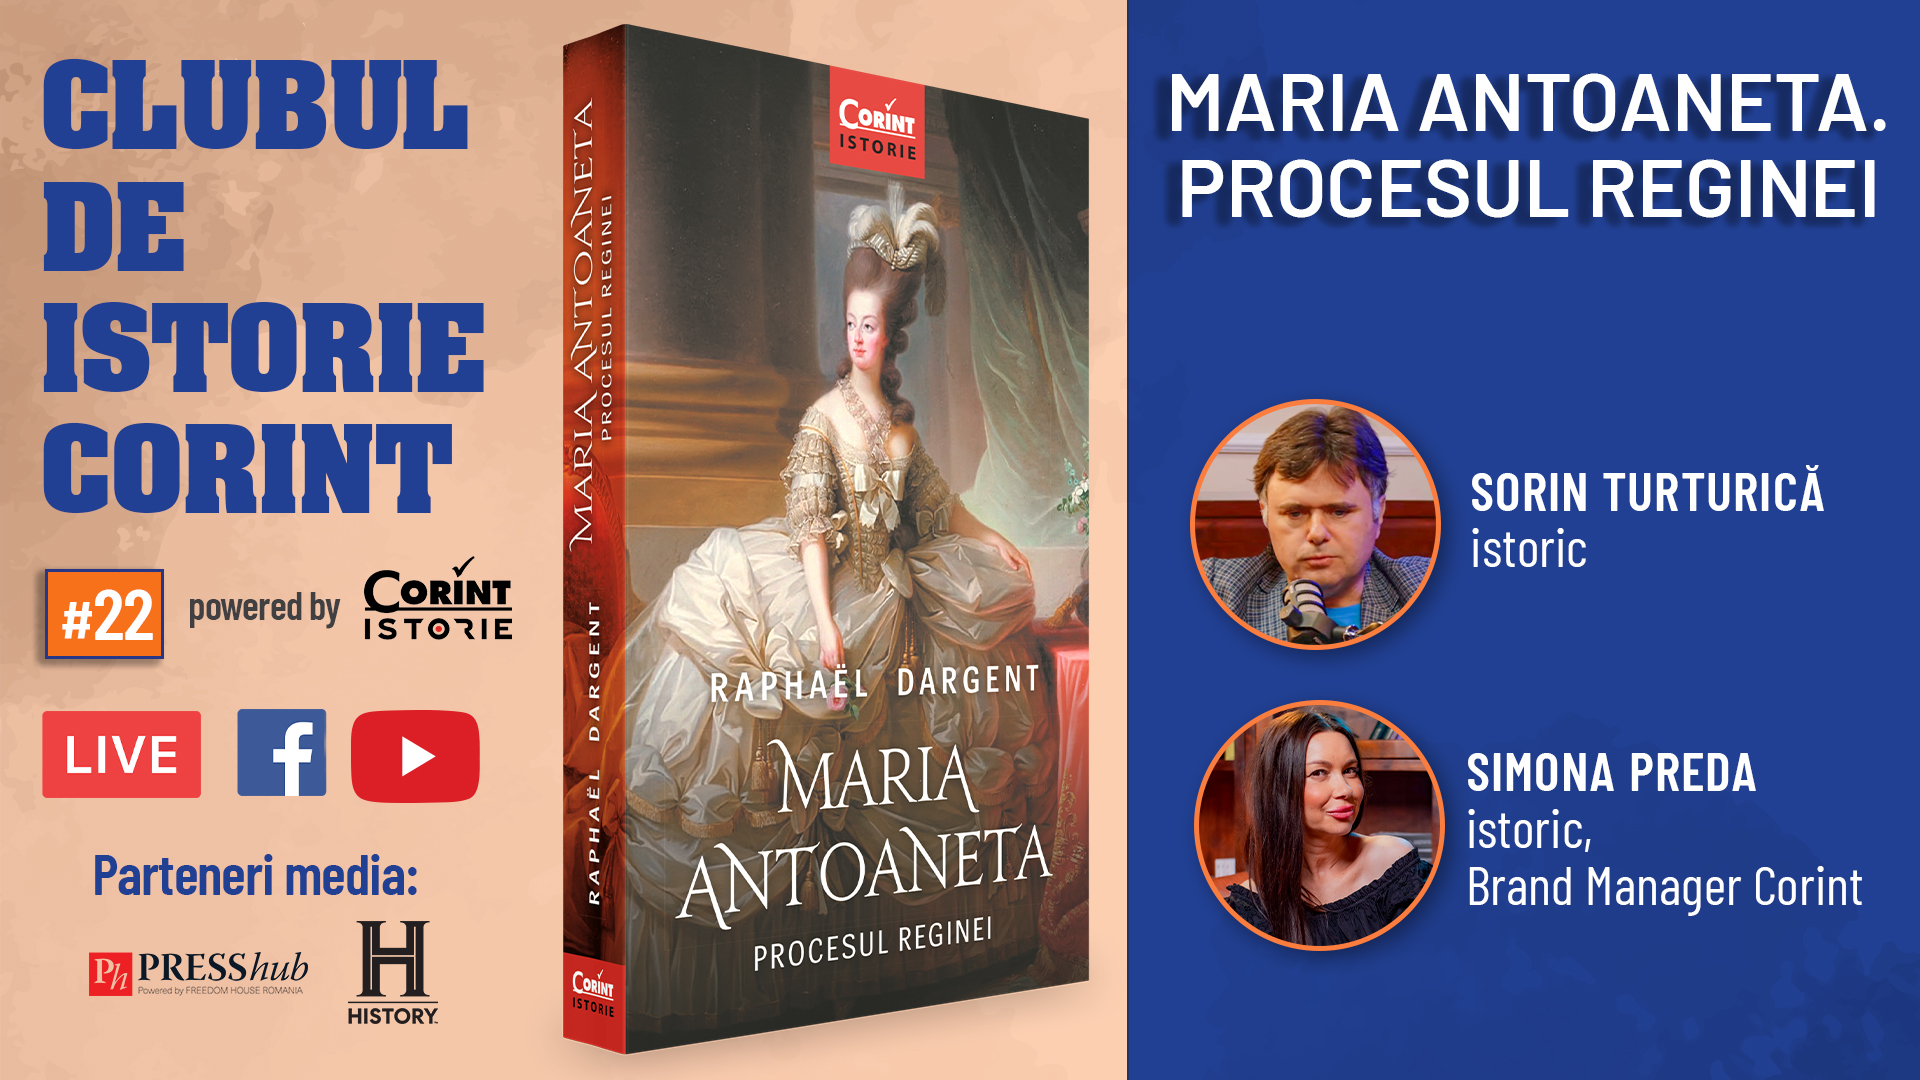 Clubul de istorie Corint #22: Maria Antoaneta. Procesul Reginei